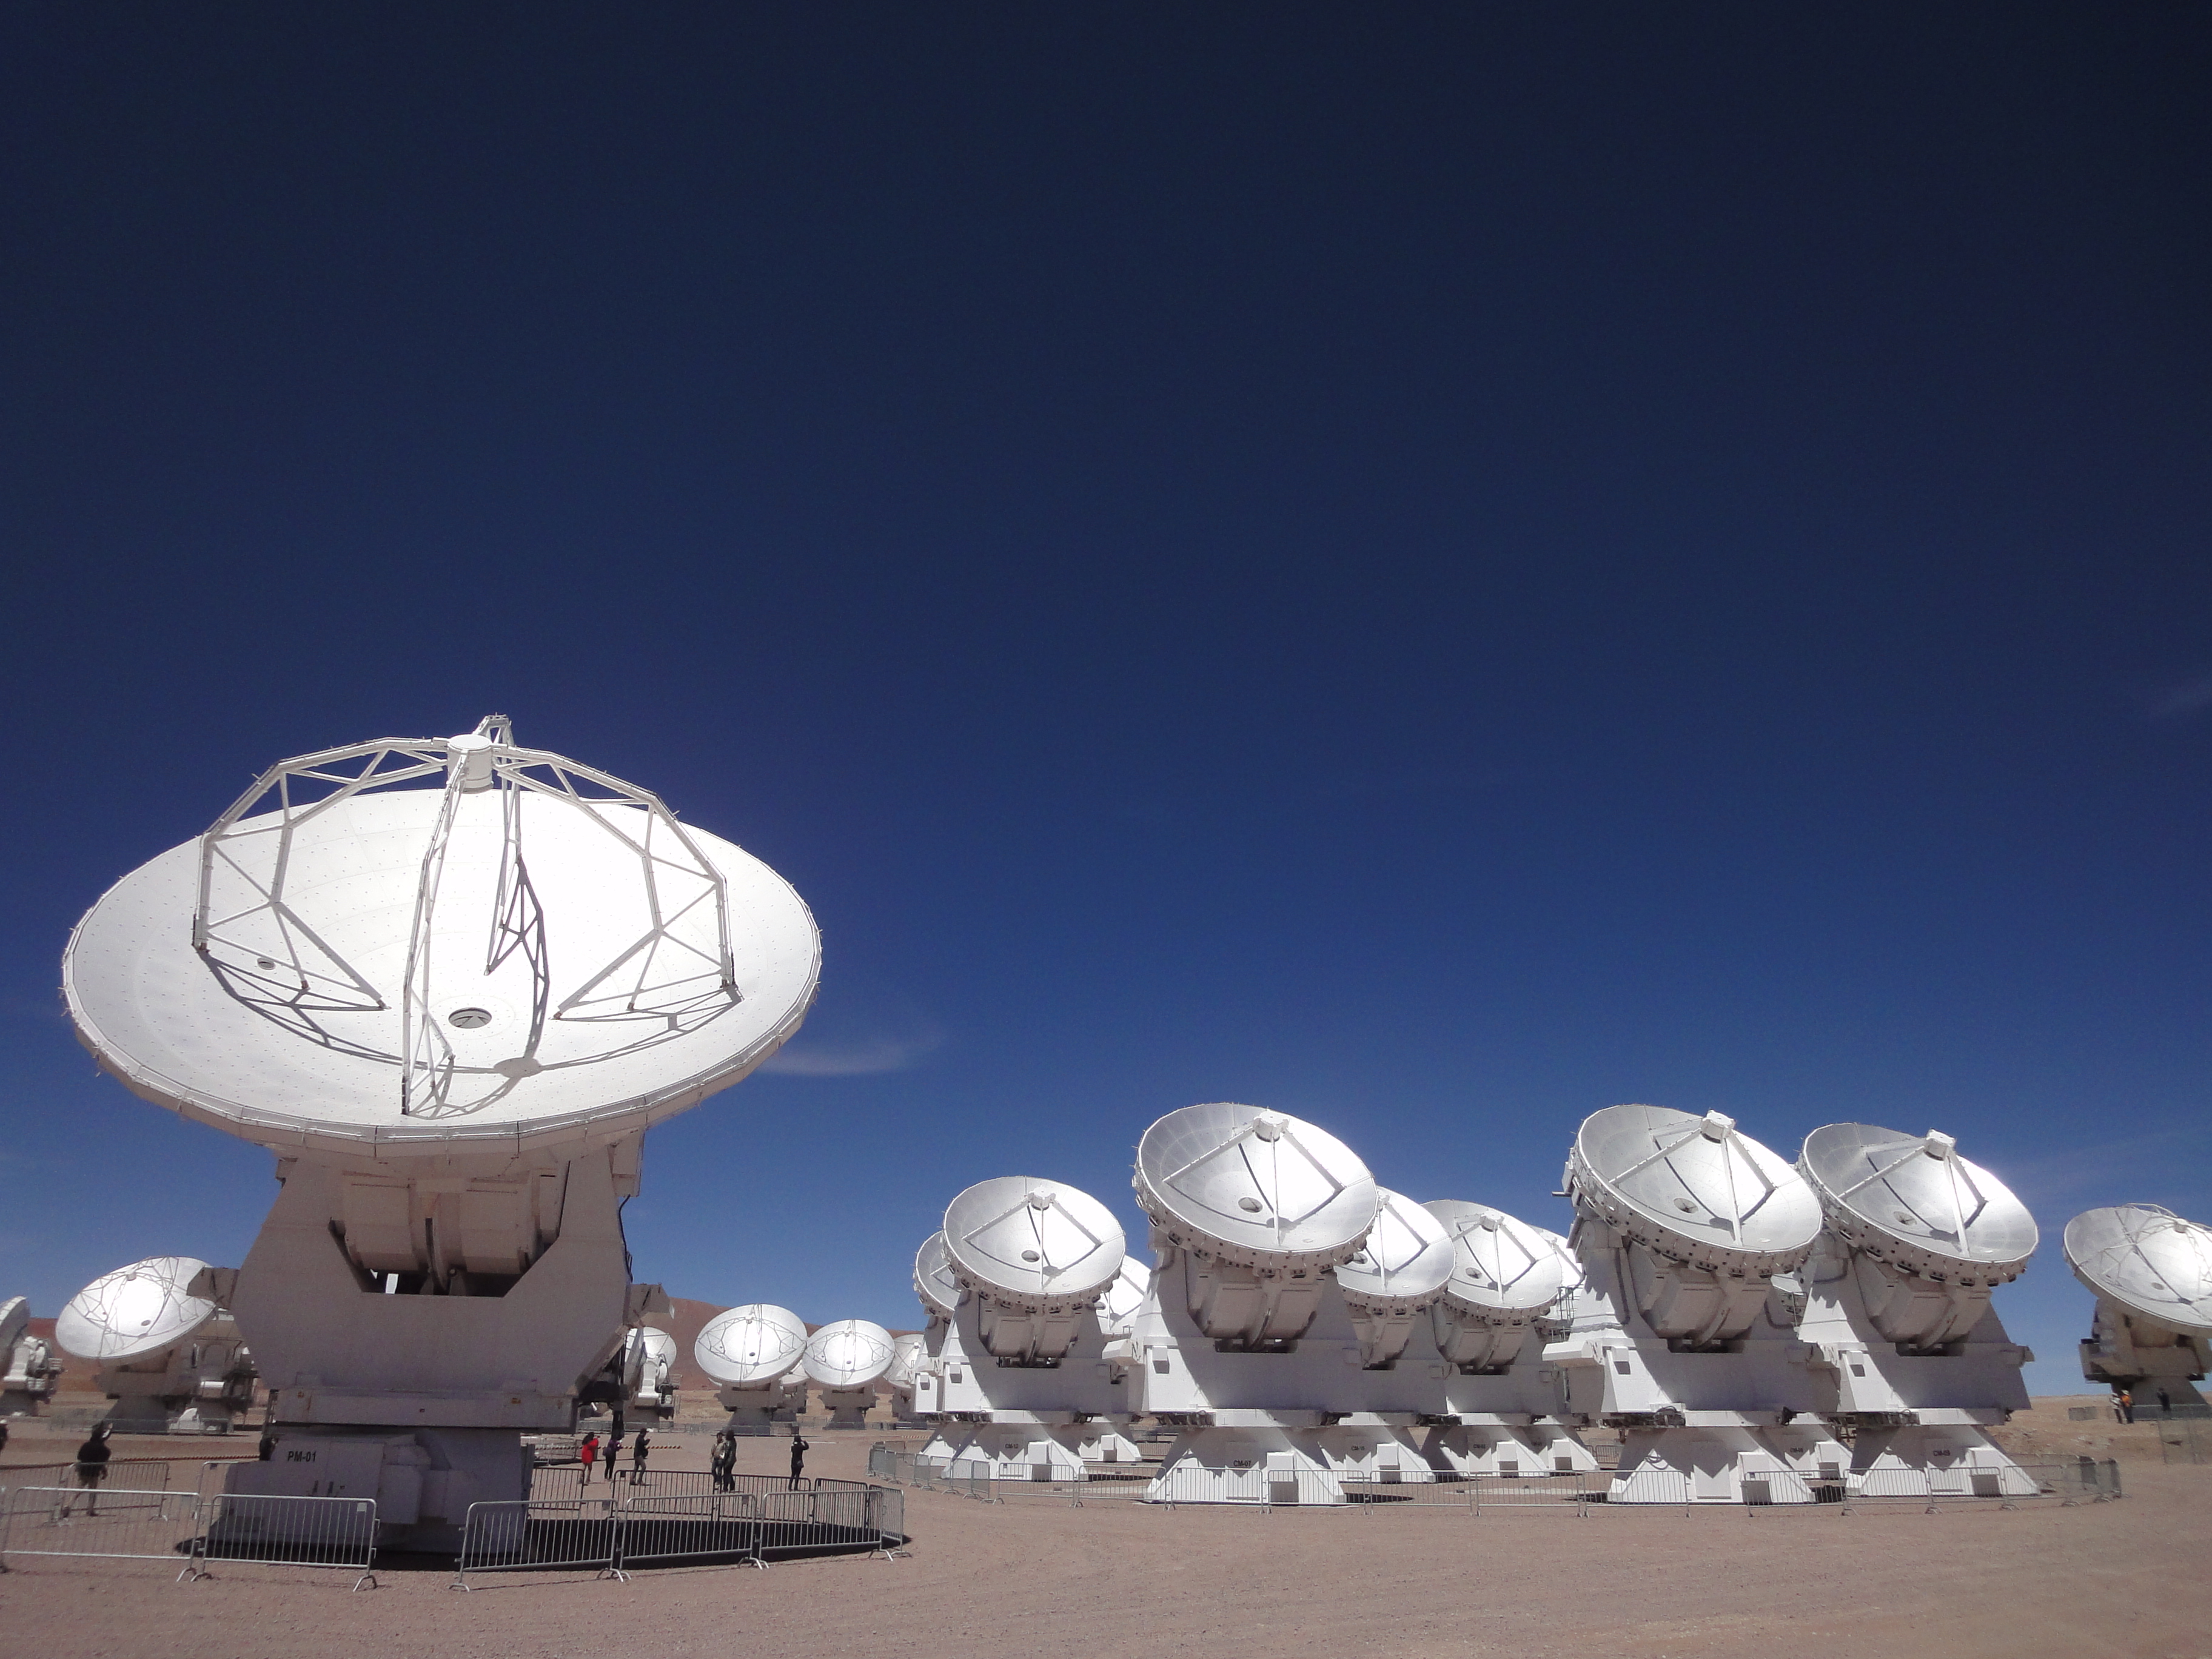 Several silver dish antennas pointing upwards to a dark blue sky